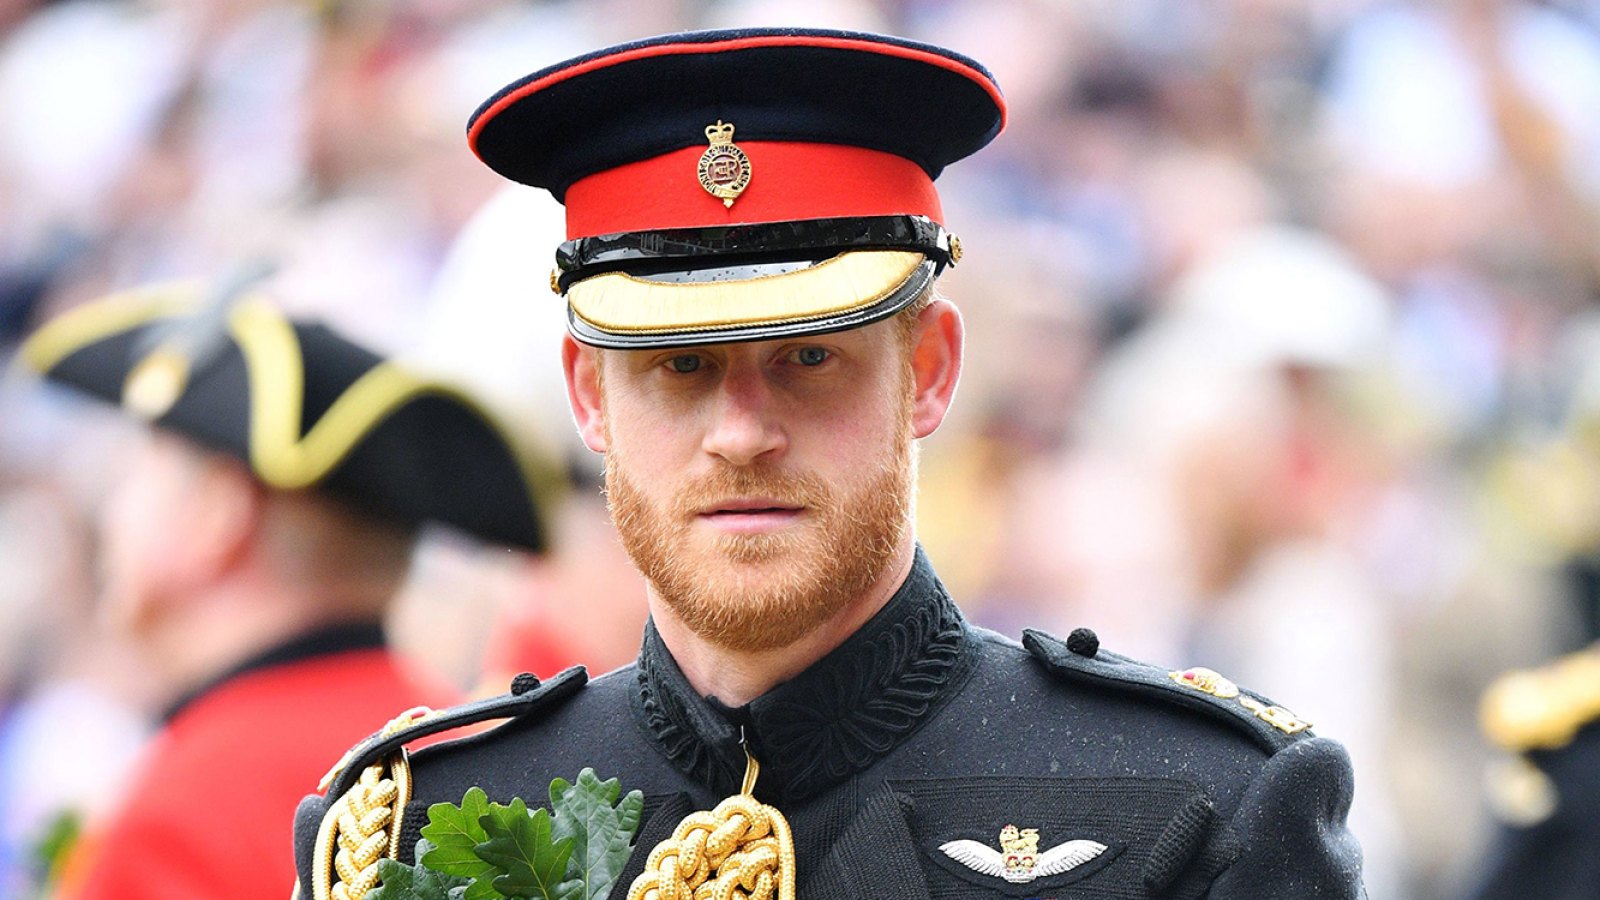 Prince Harry's Military Uniform at Queen Elizabeth II's Vigil Did Not Feature His Grandmother's Initials